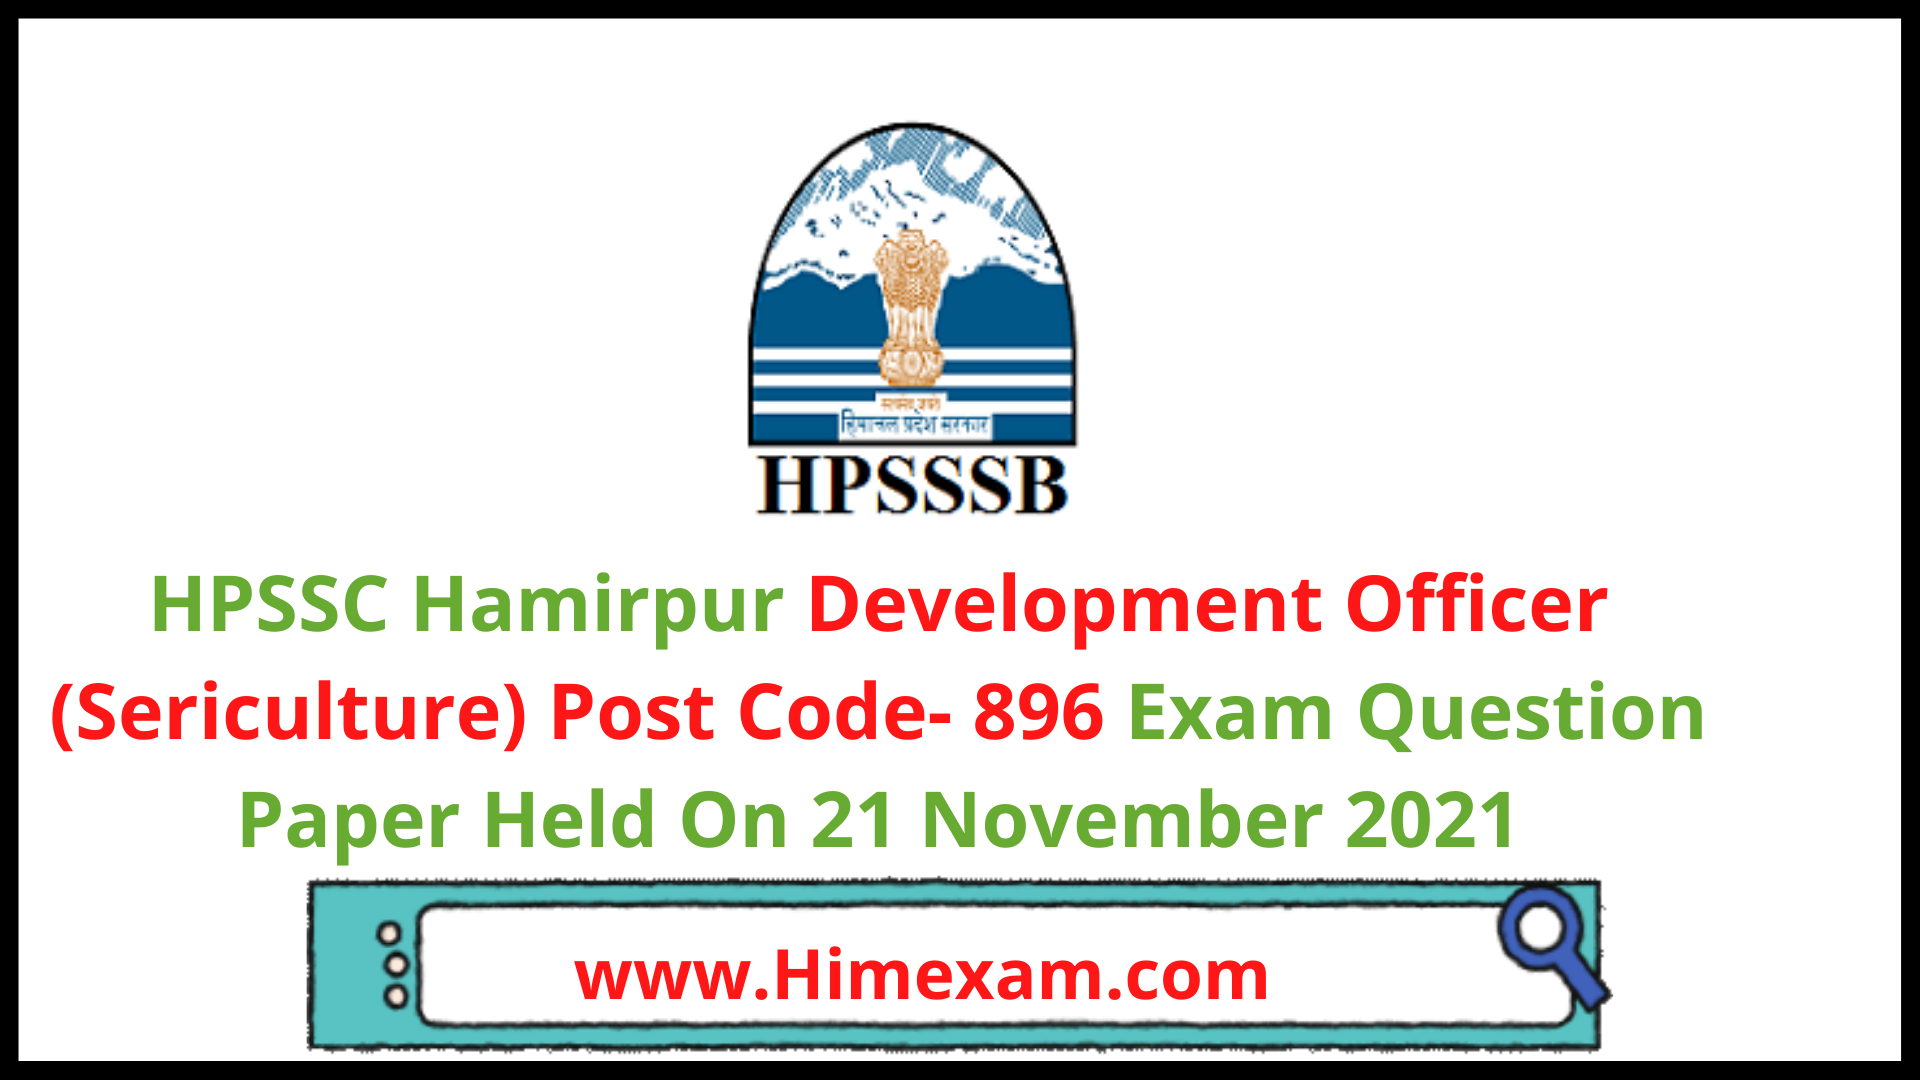 HPSSC Hamirpur Development Officer (Sericulture) Post Code- 896 Exam Question Paper Held On 21 November 2021